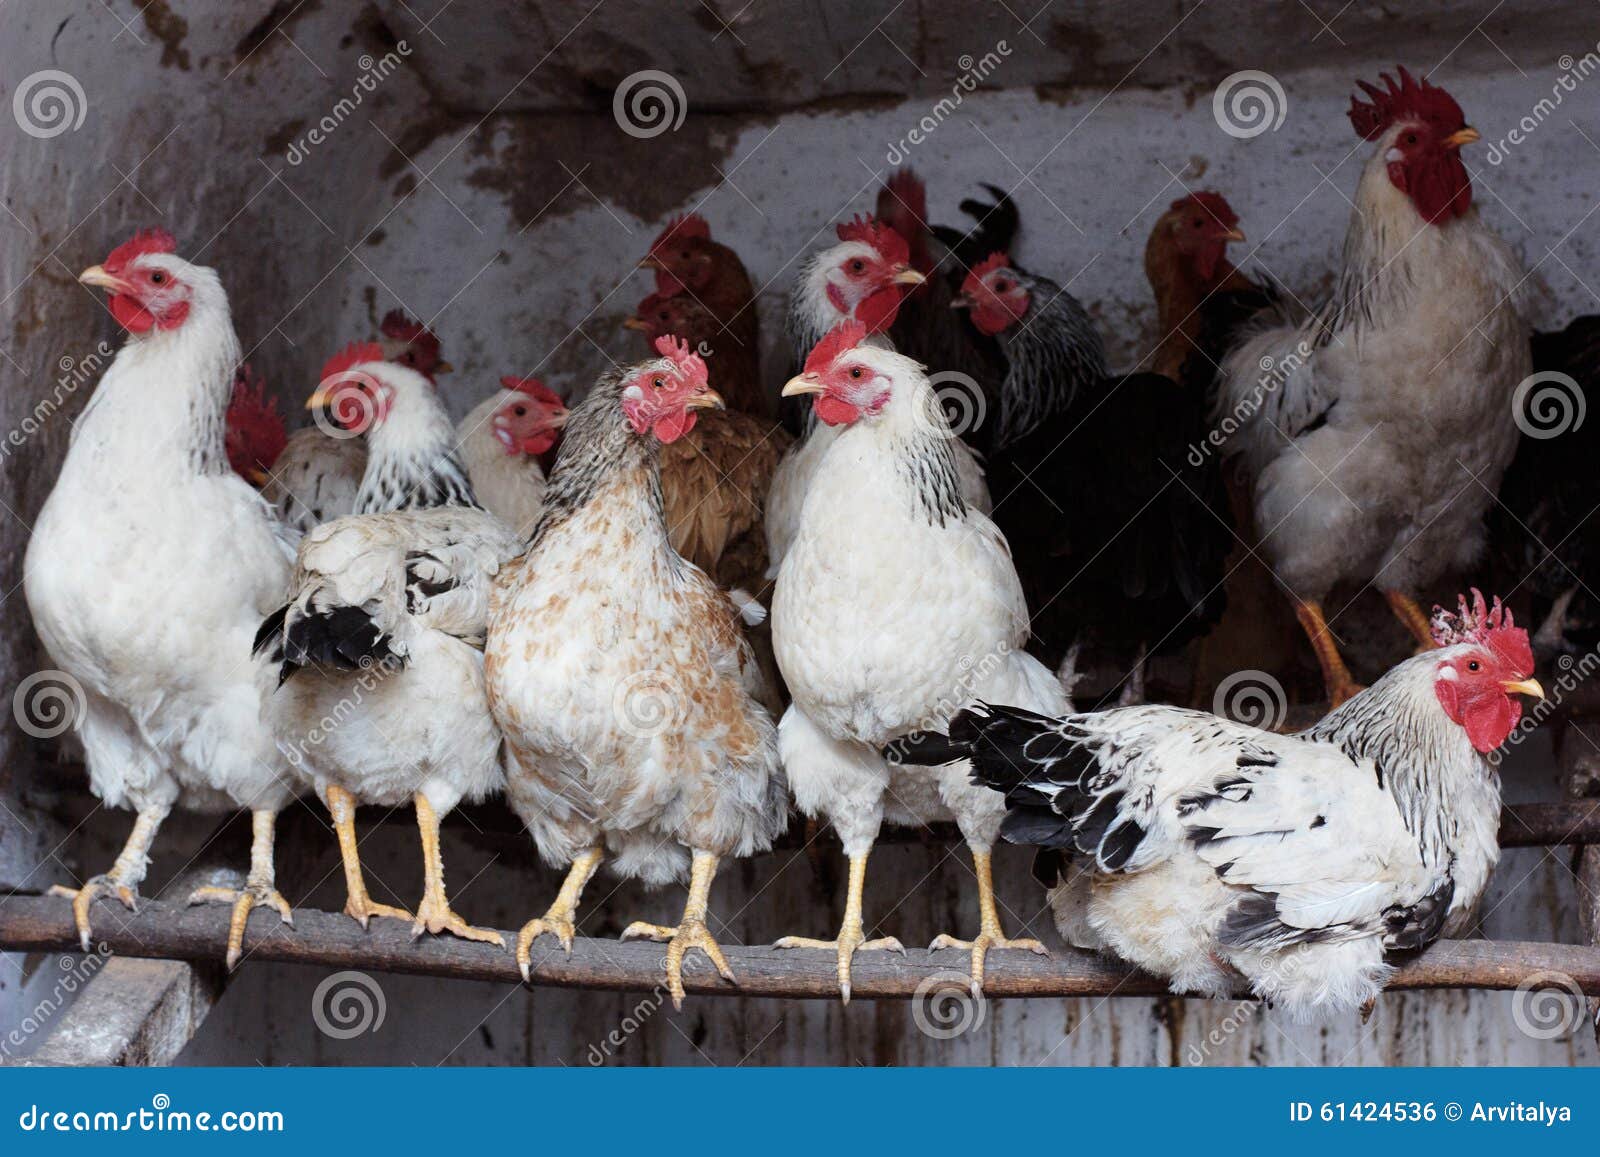 [Image: chickens-henhouse-herd-domestic-birds-ba...424536.jpg]